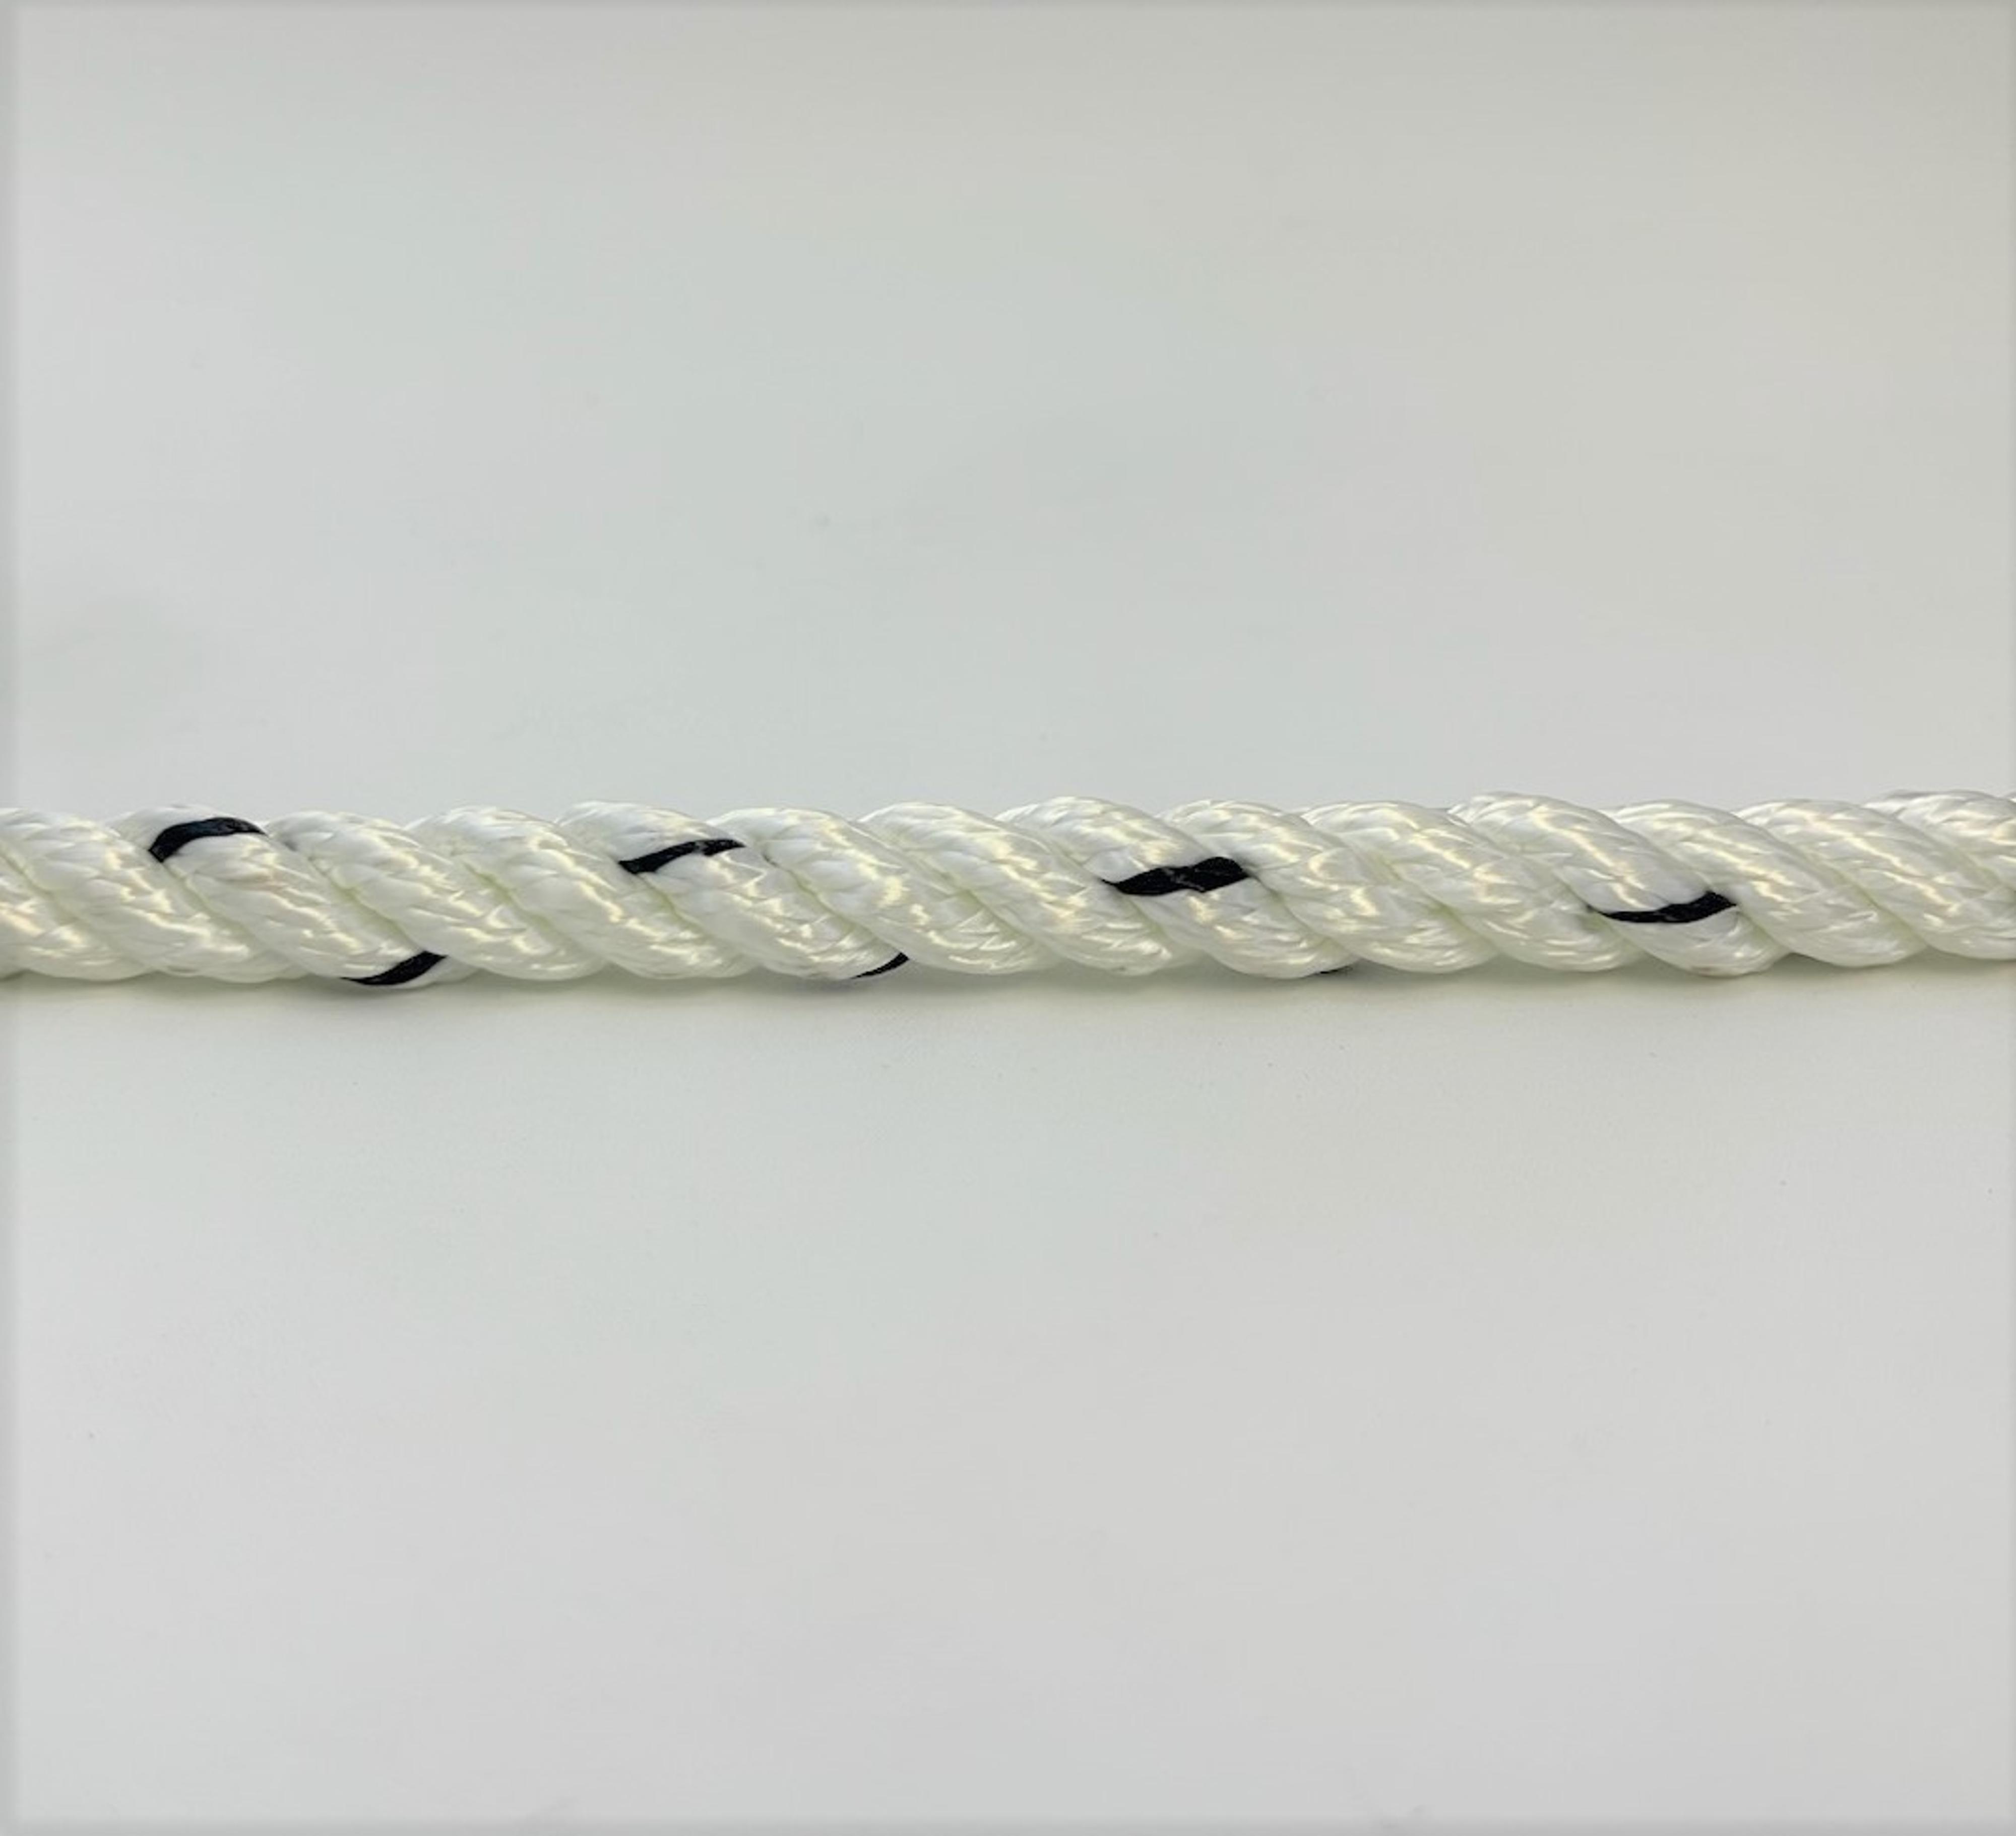 3 Strand twisted longline fishing rope